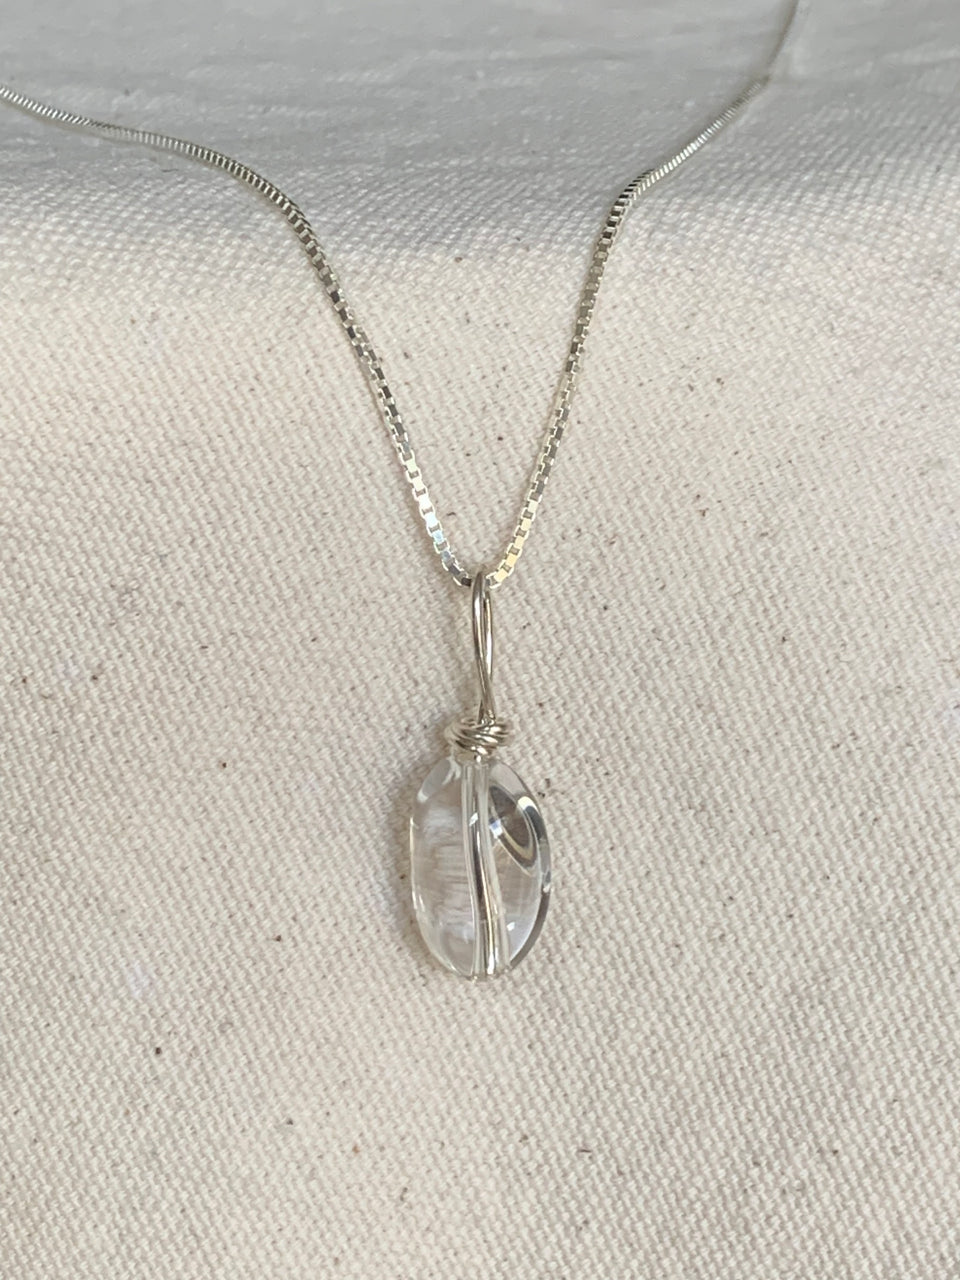 Clear quartz necklace sterling silver